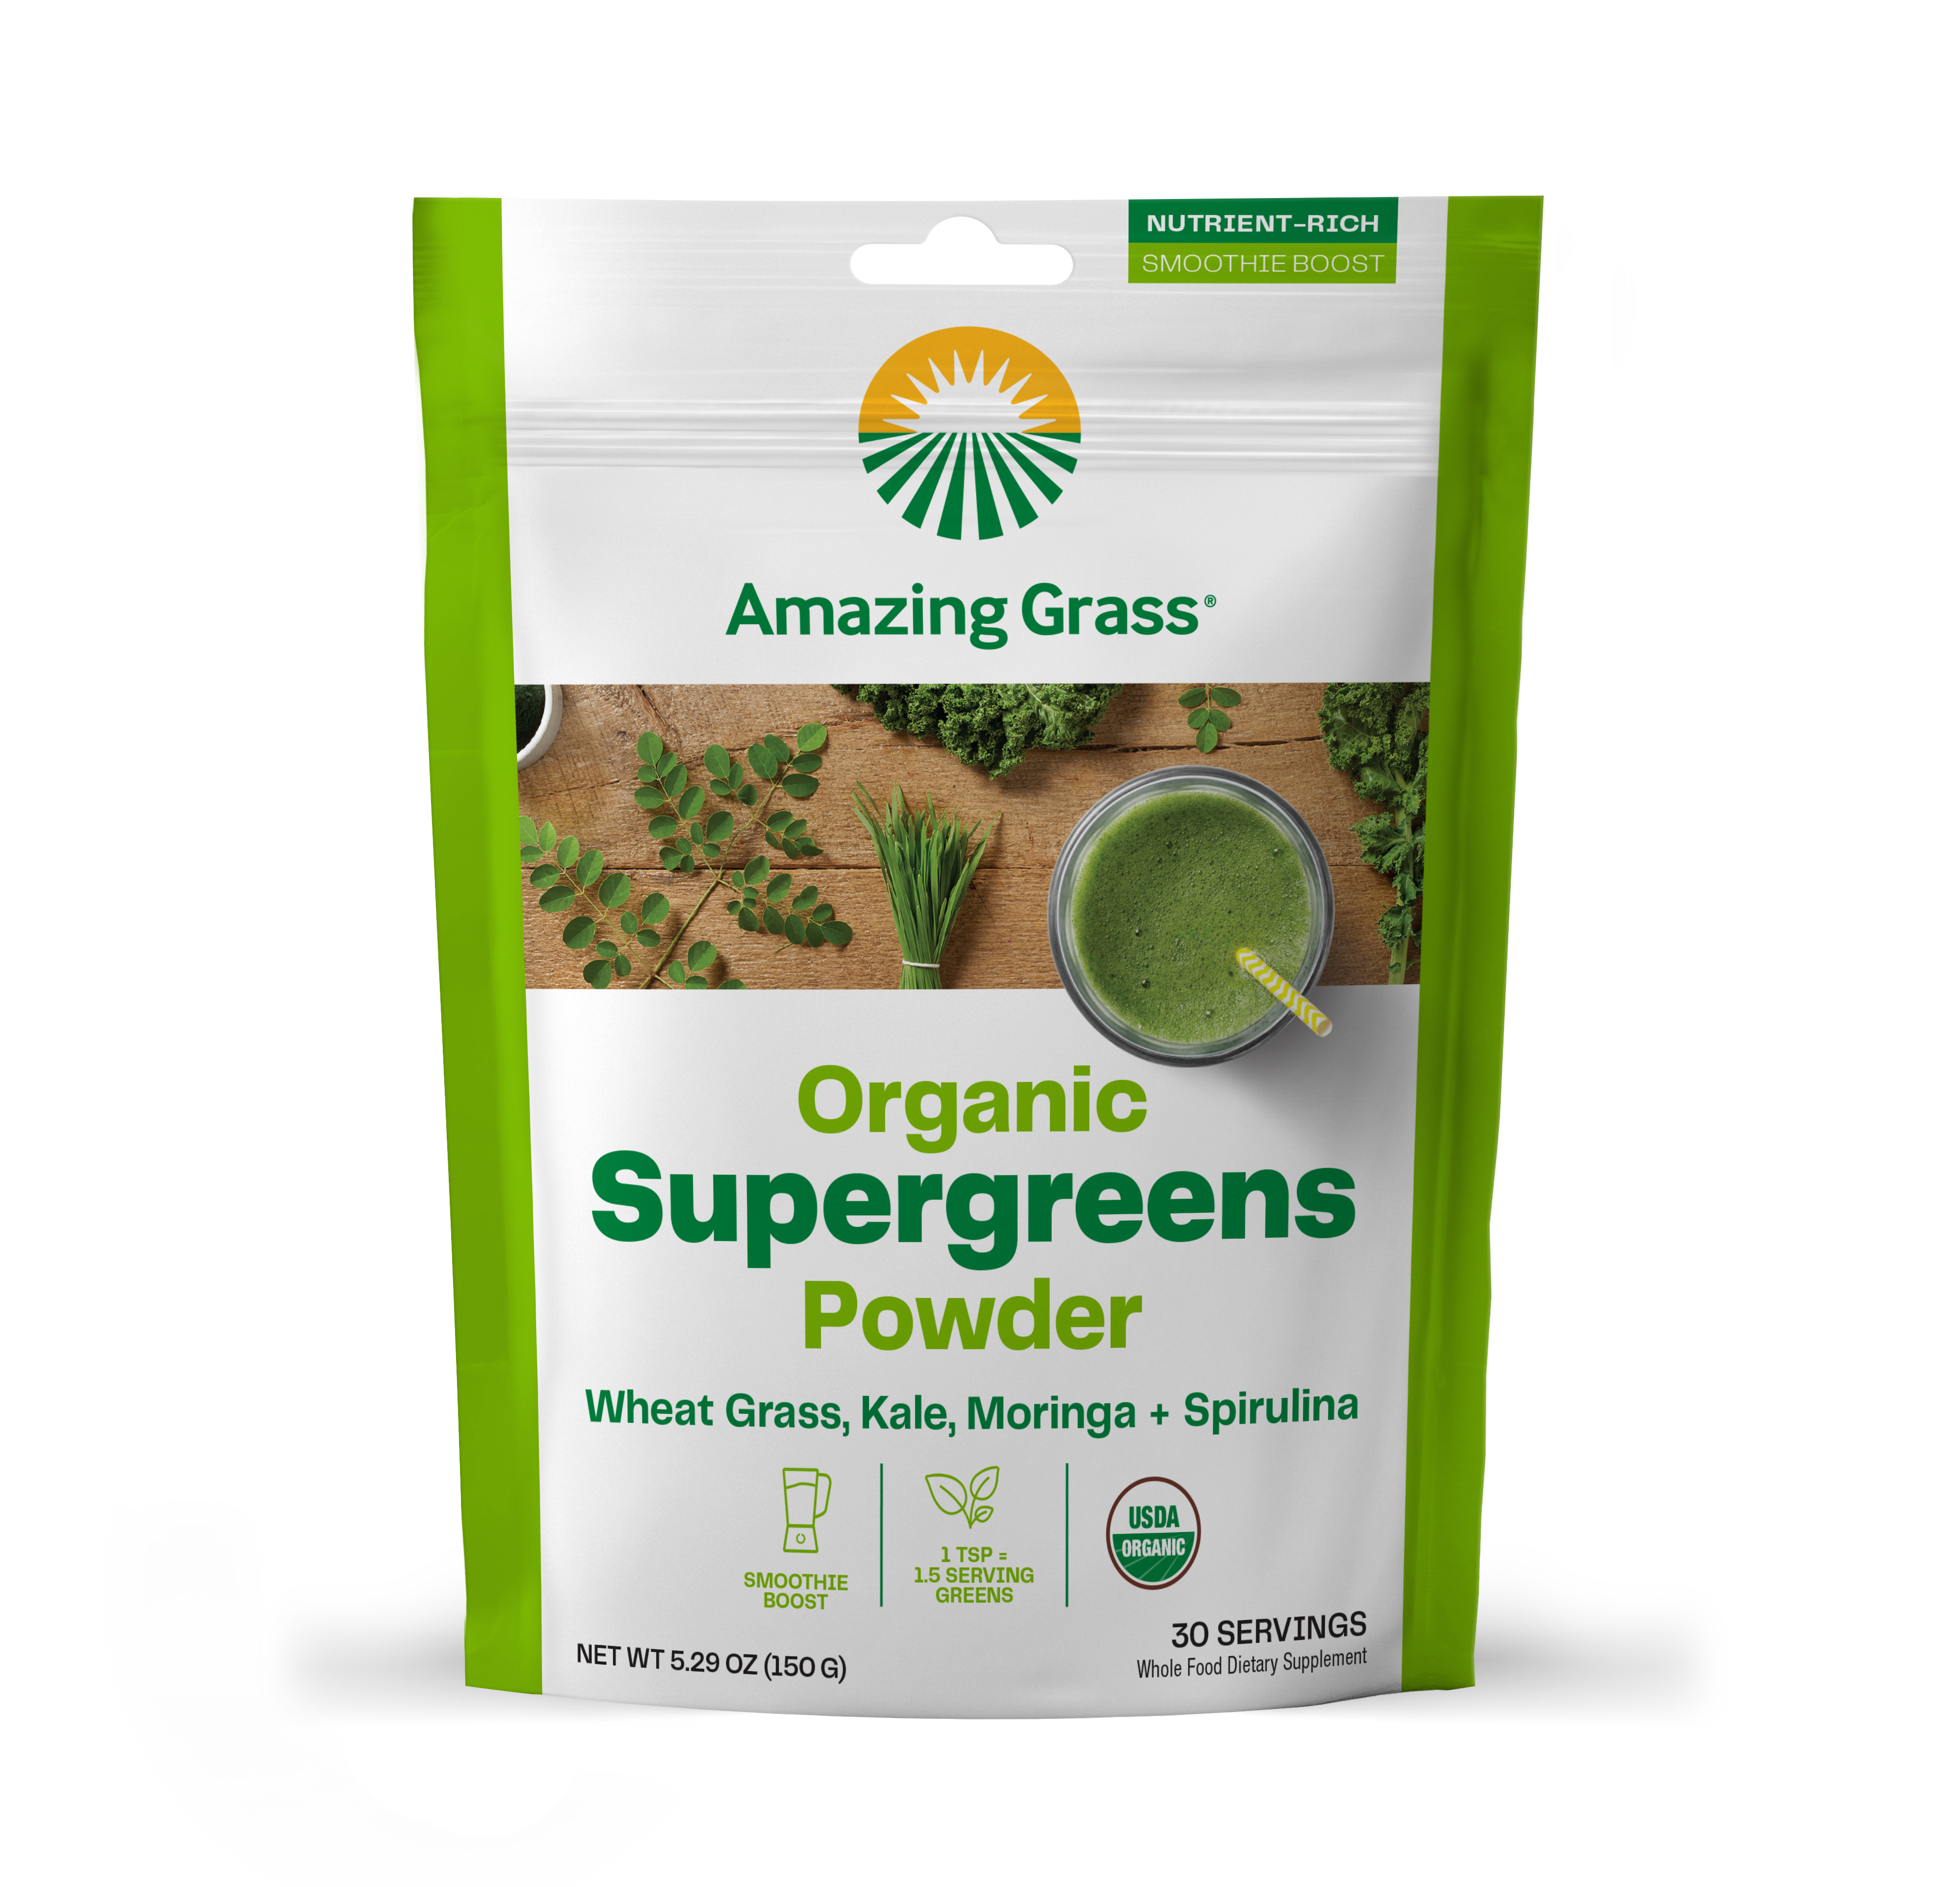 Organic Super Greens